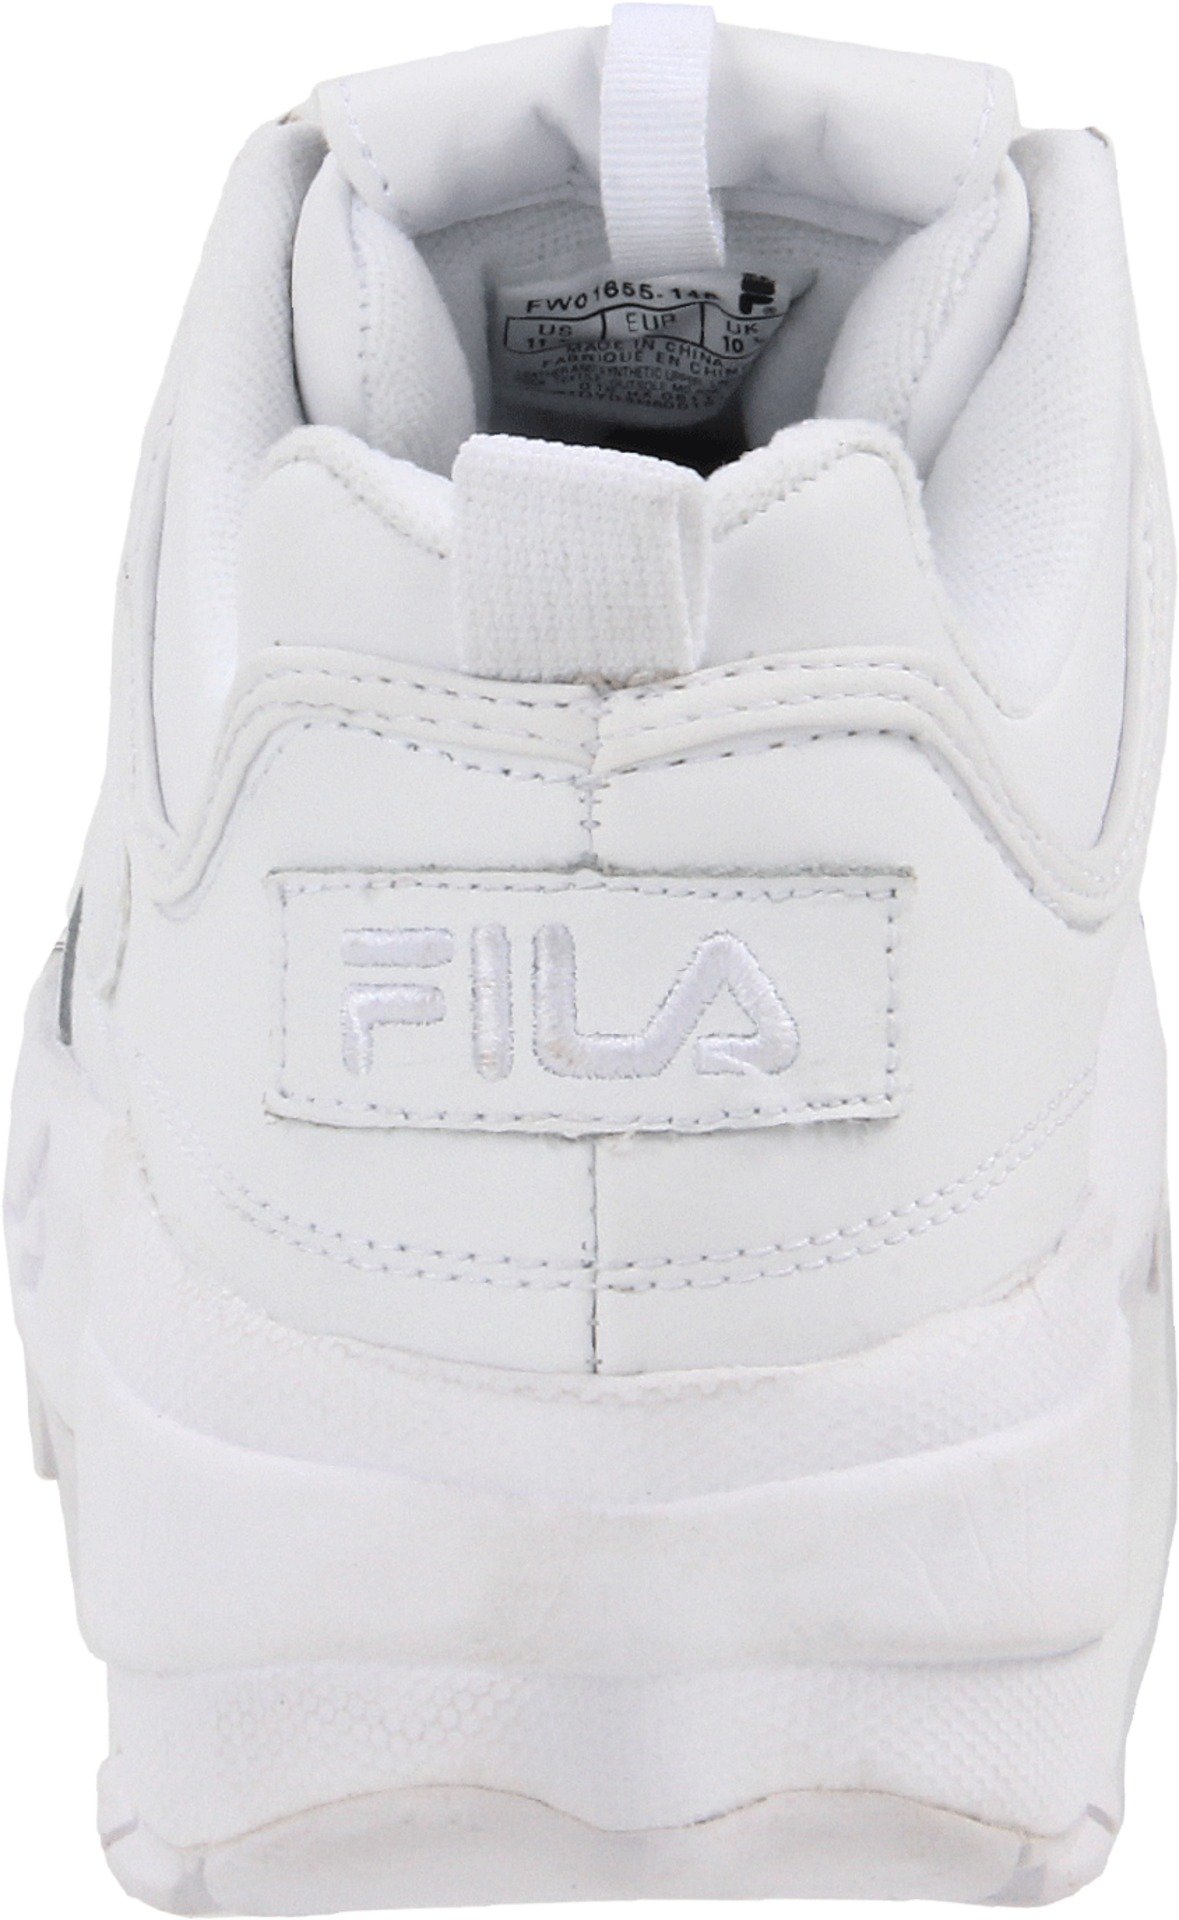 Fila FW04495 FW01655 FW01653 Men's Classic Disruptor II Sneakers All ...